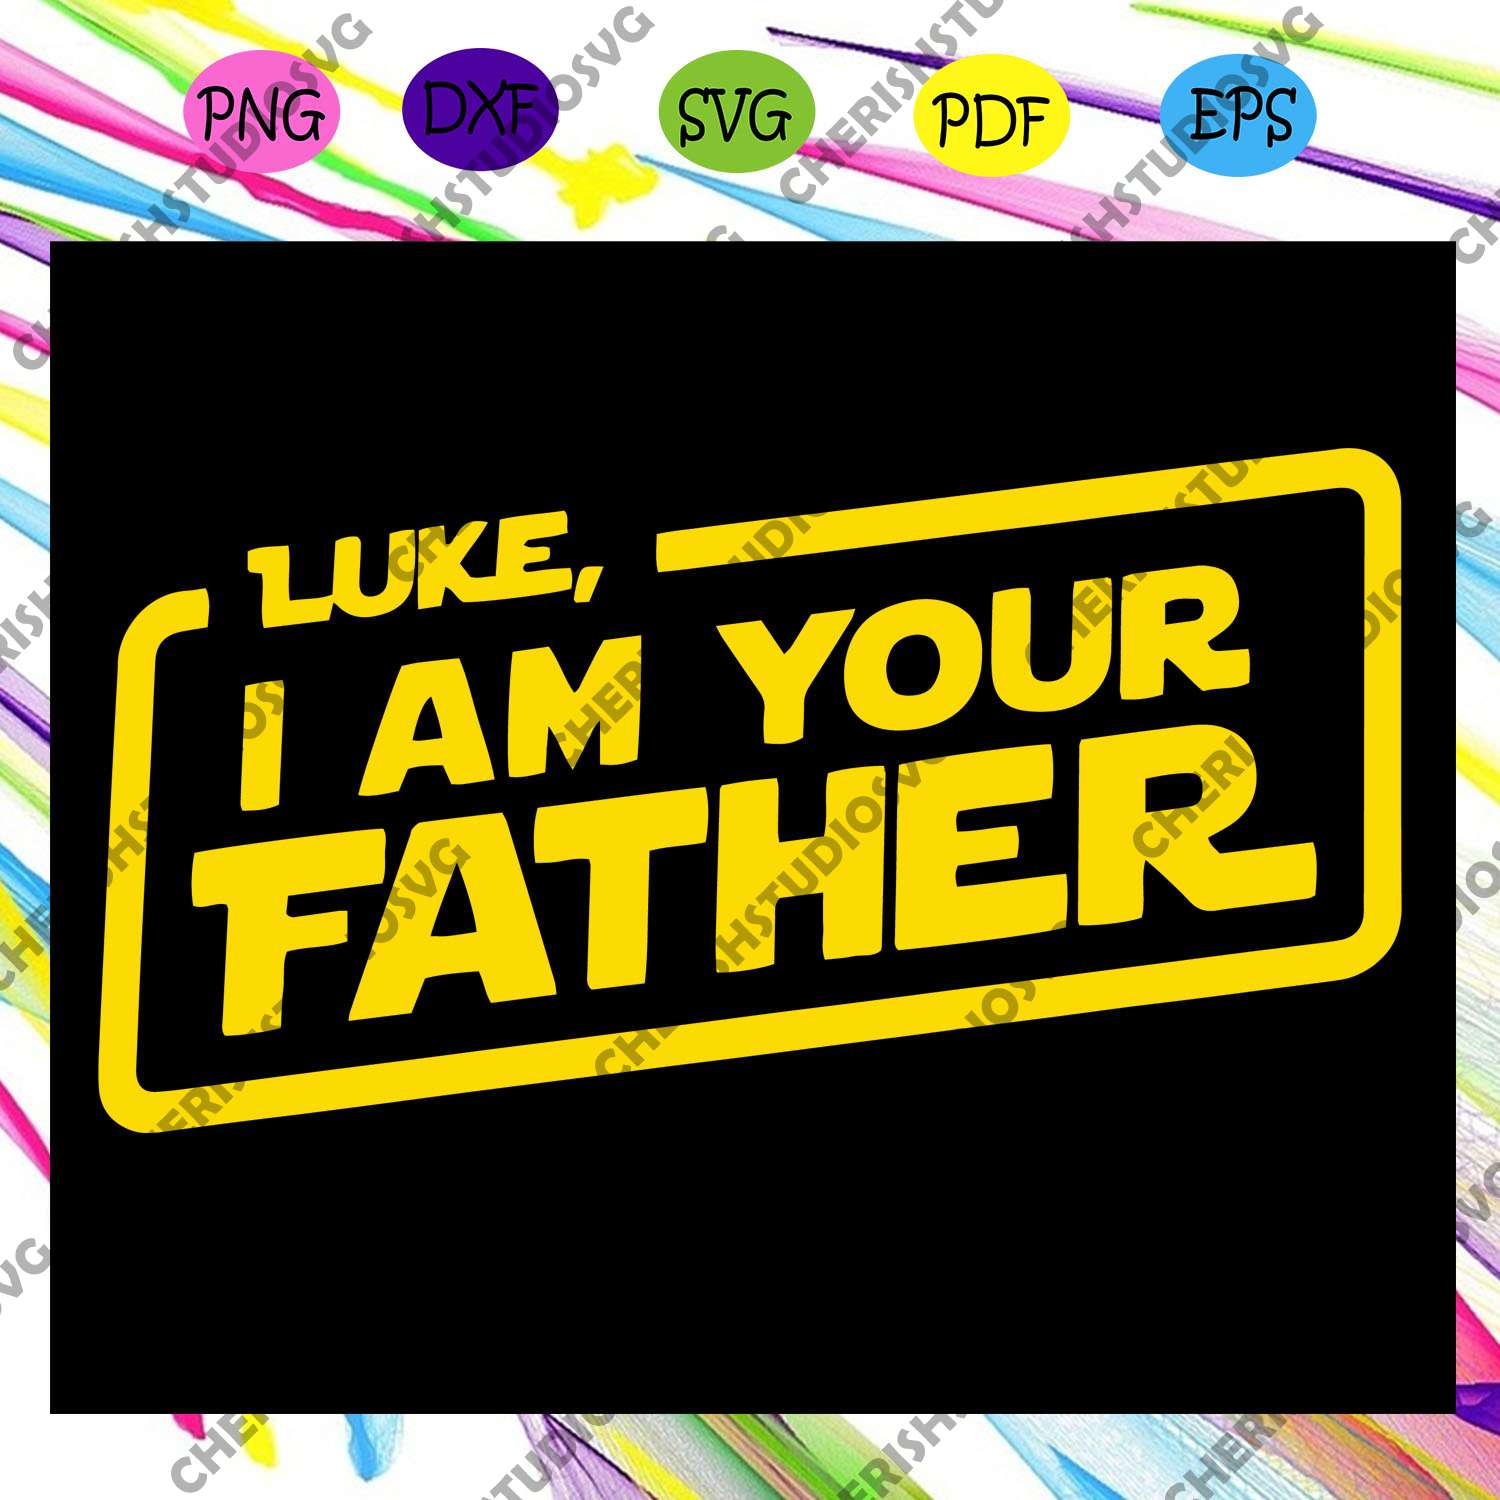 Download Luke I Am Your Father Fathers Day Fathers Day Gift Star Wars Parody Cherishsvgstudio